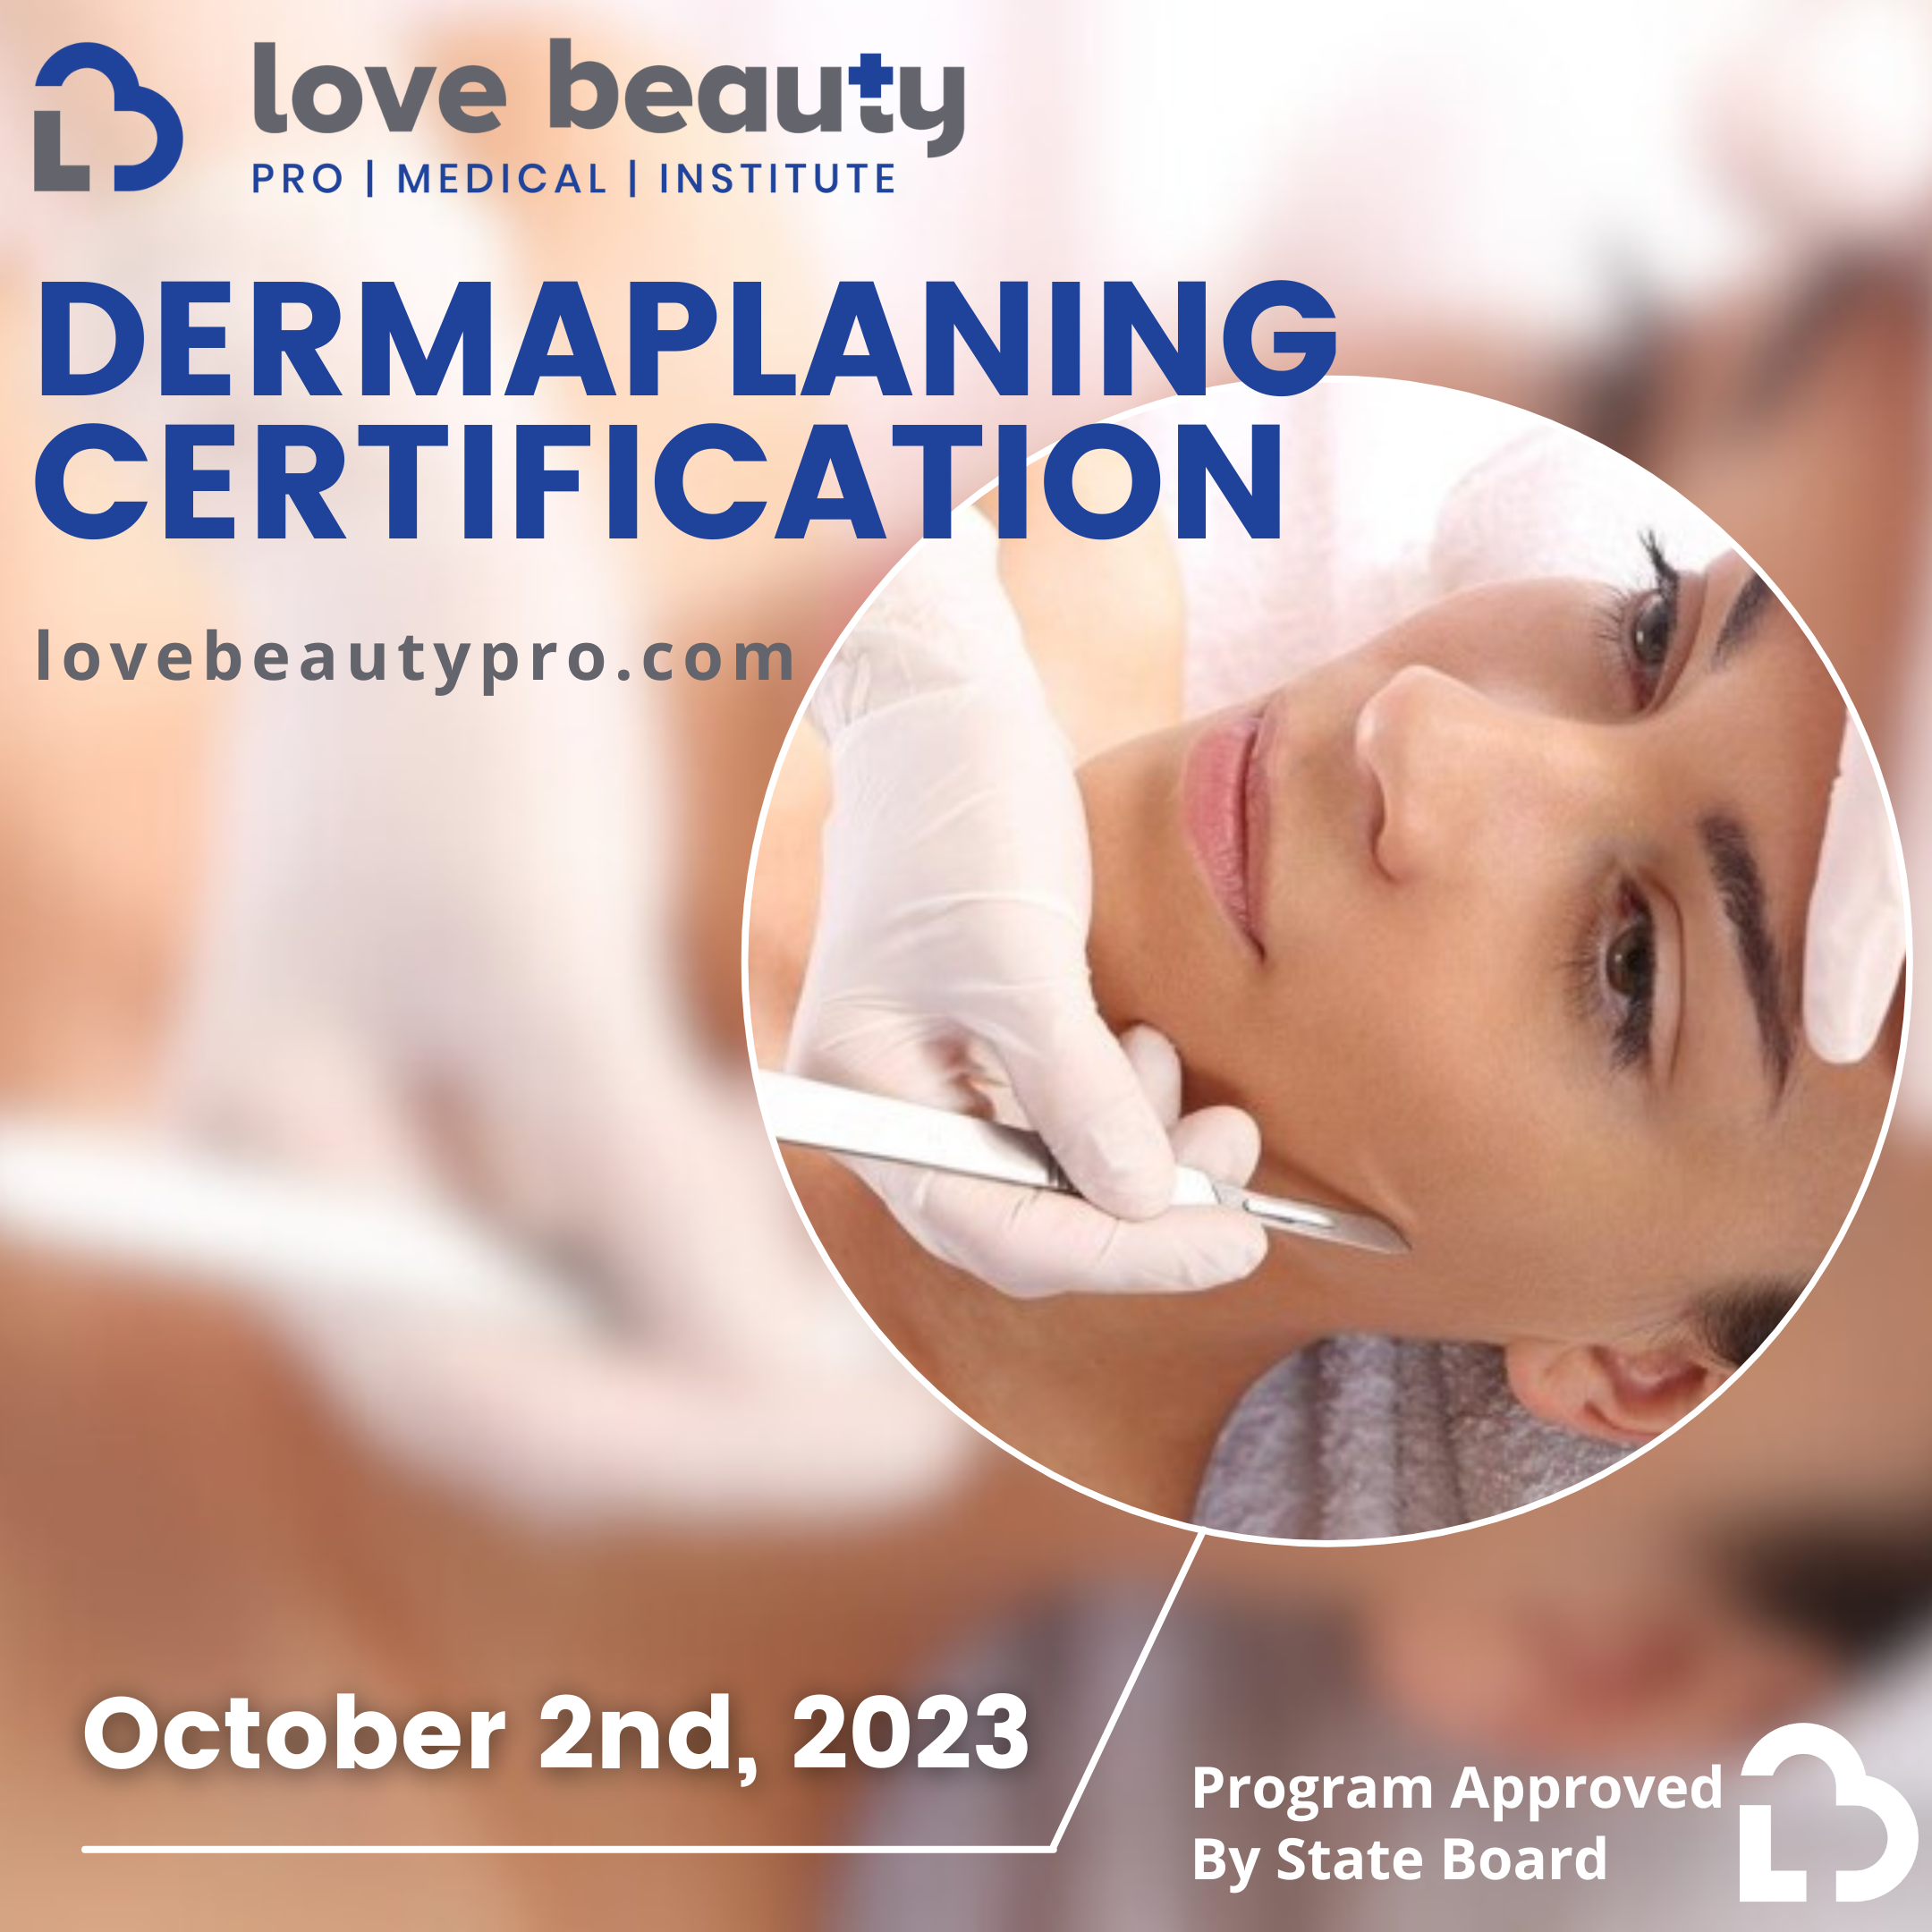 Dermaplaning Certification - Program Approved by State Board... lovebeautypro.com